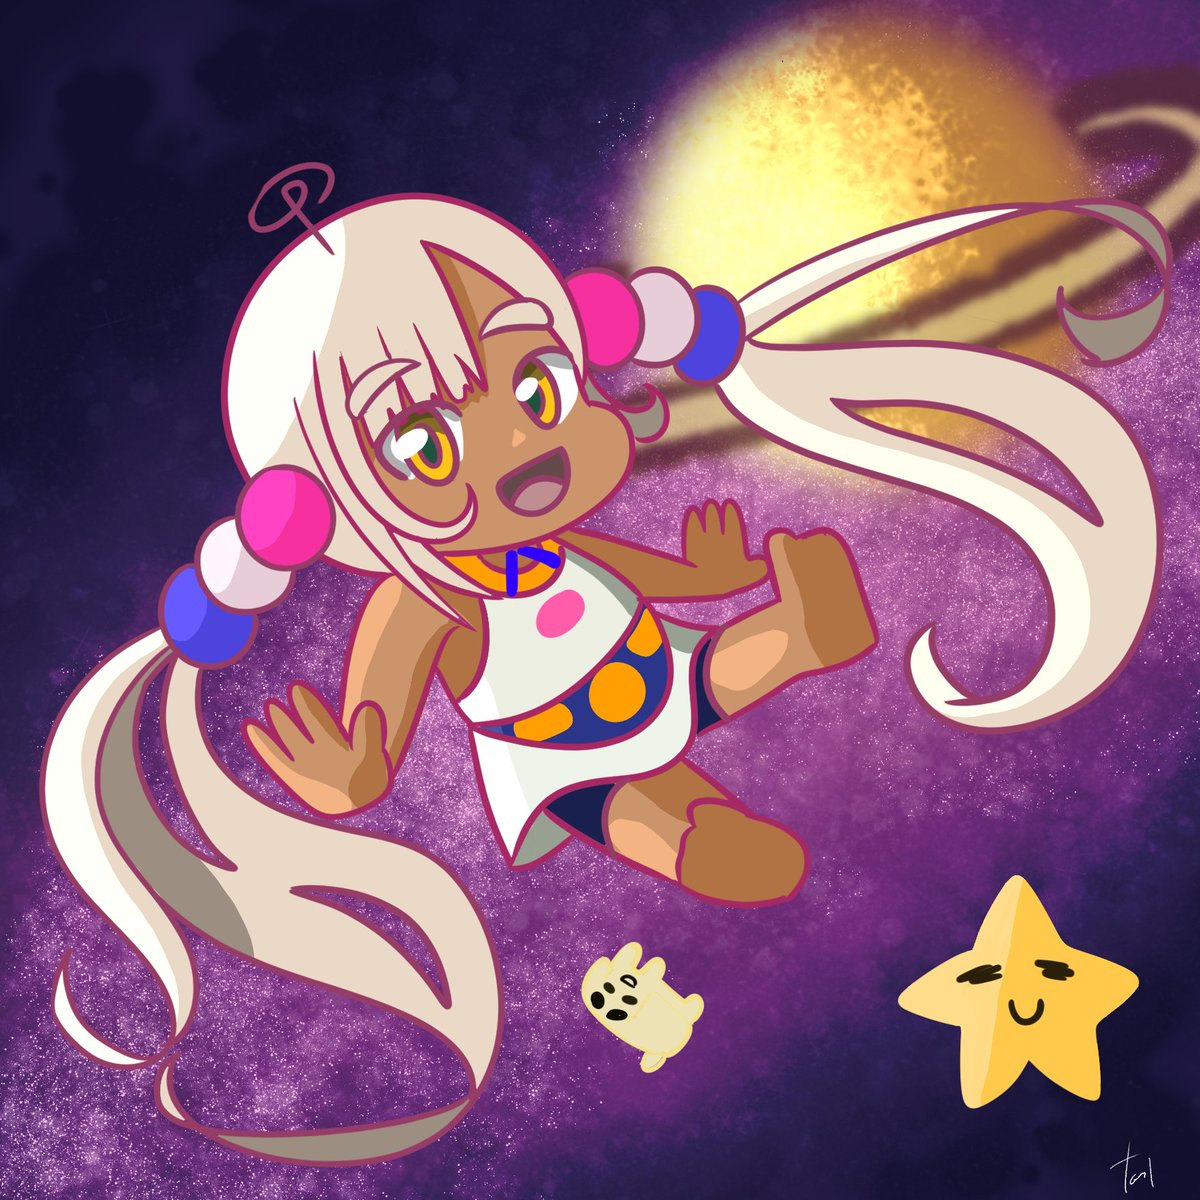 Astro girl!

#galaxillust